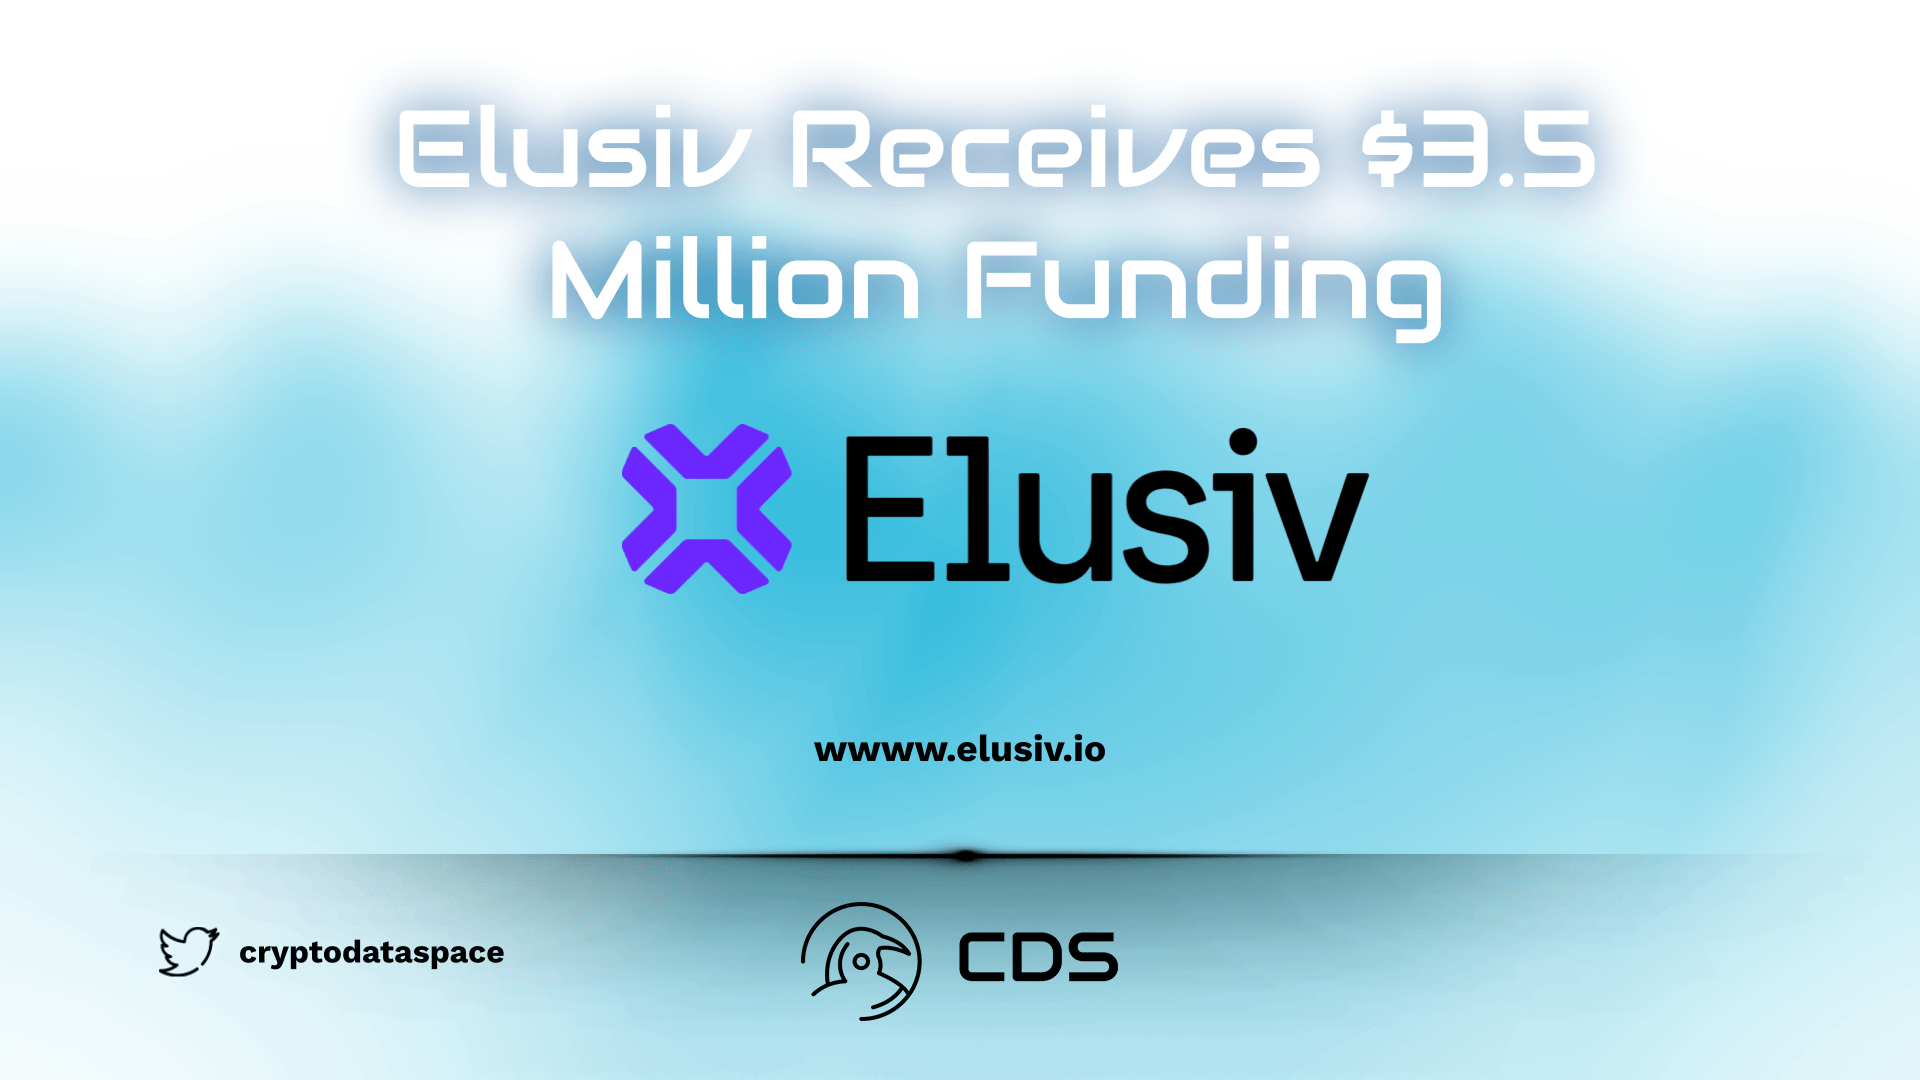 Elusiv Receives $3.5 Million Funding